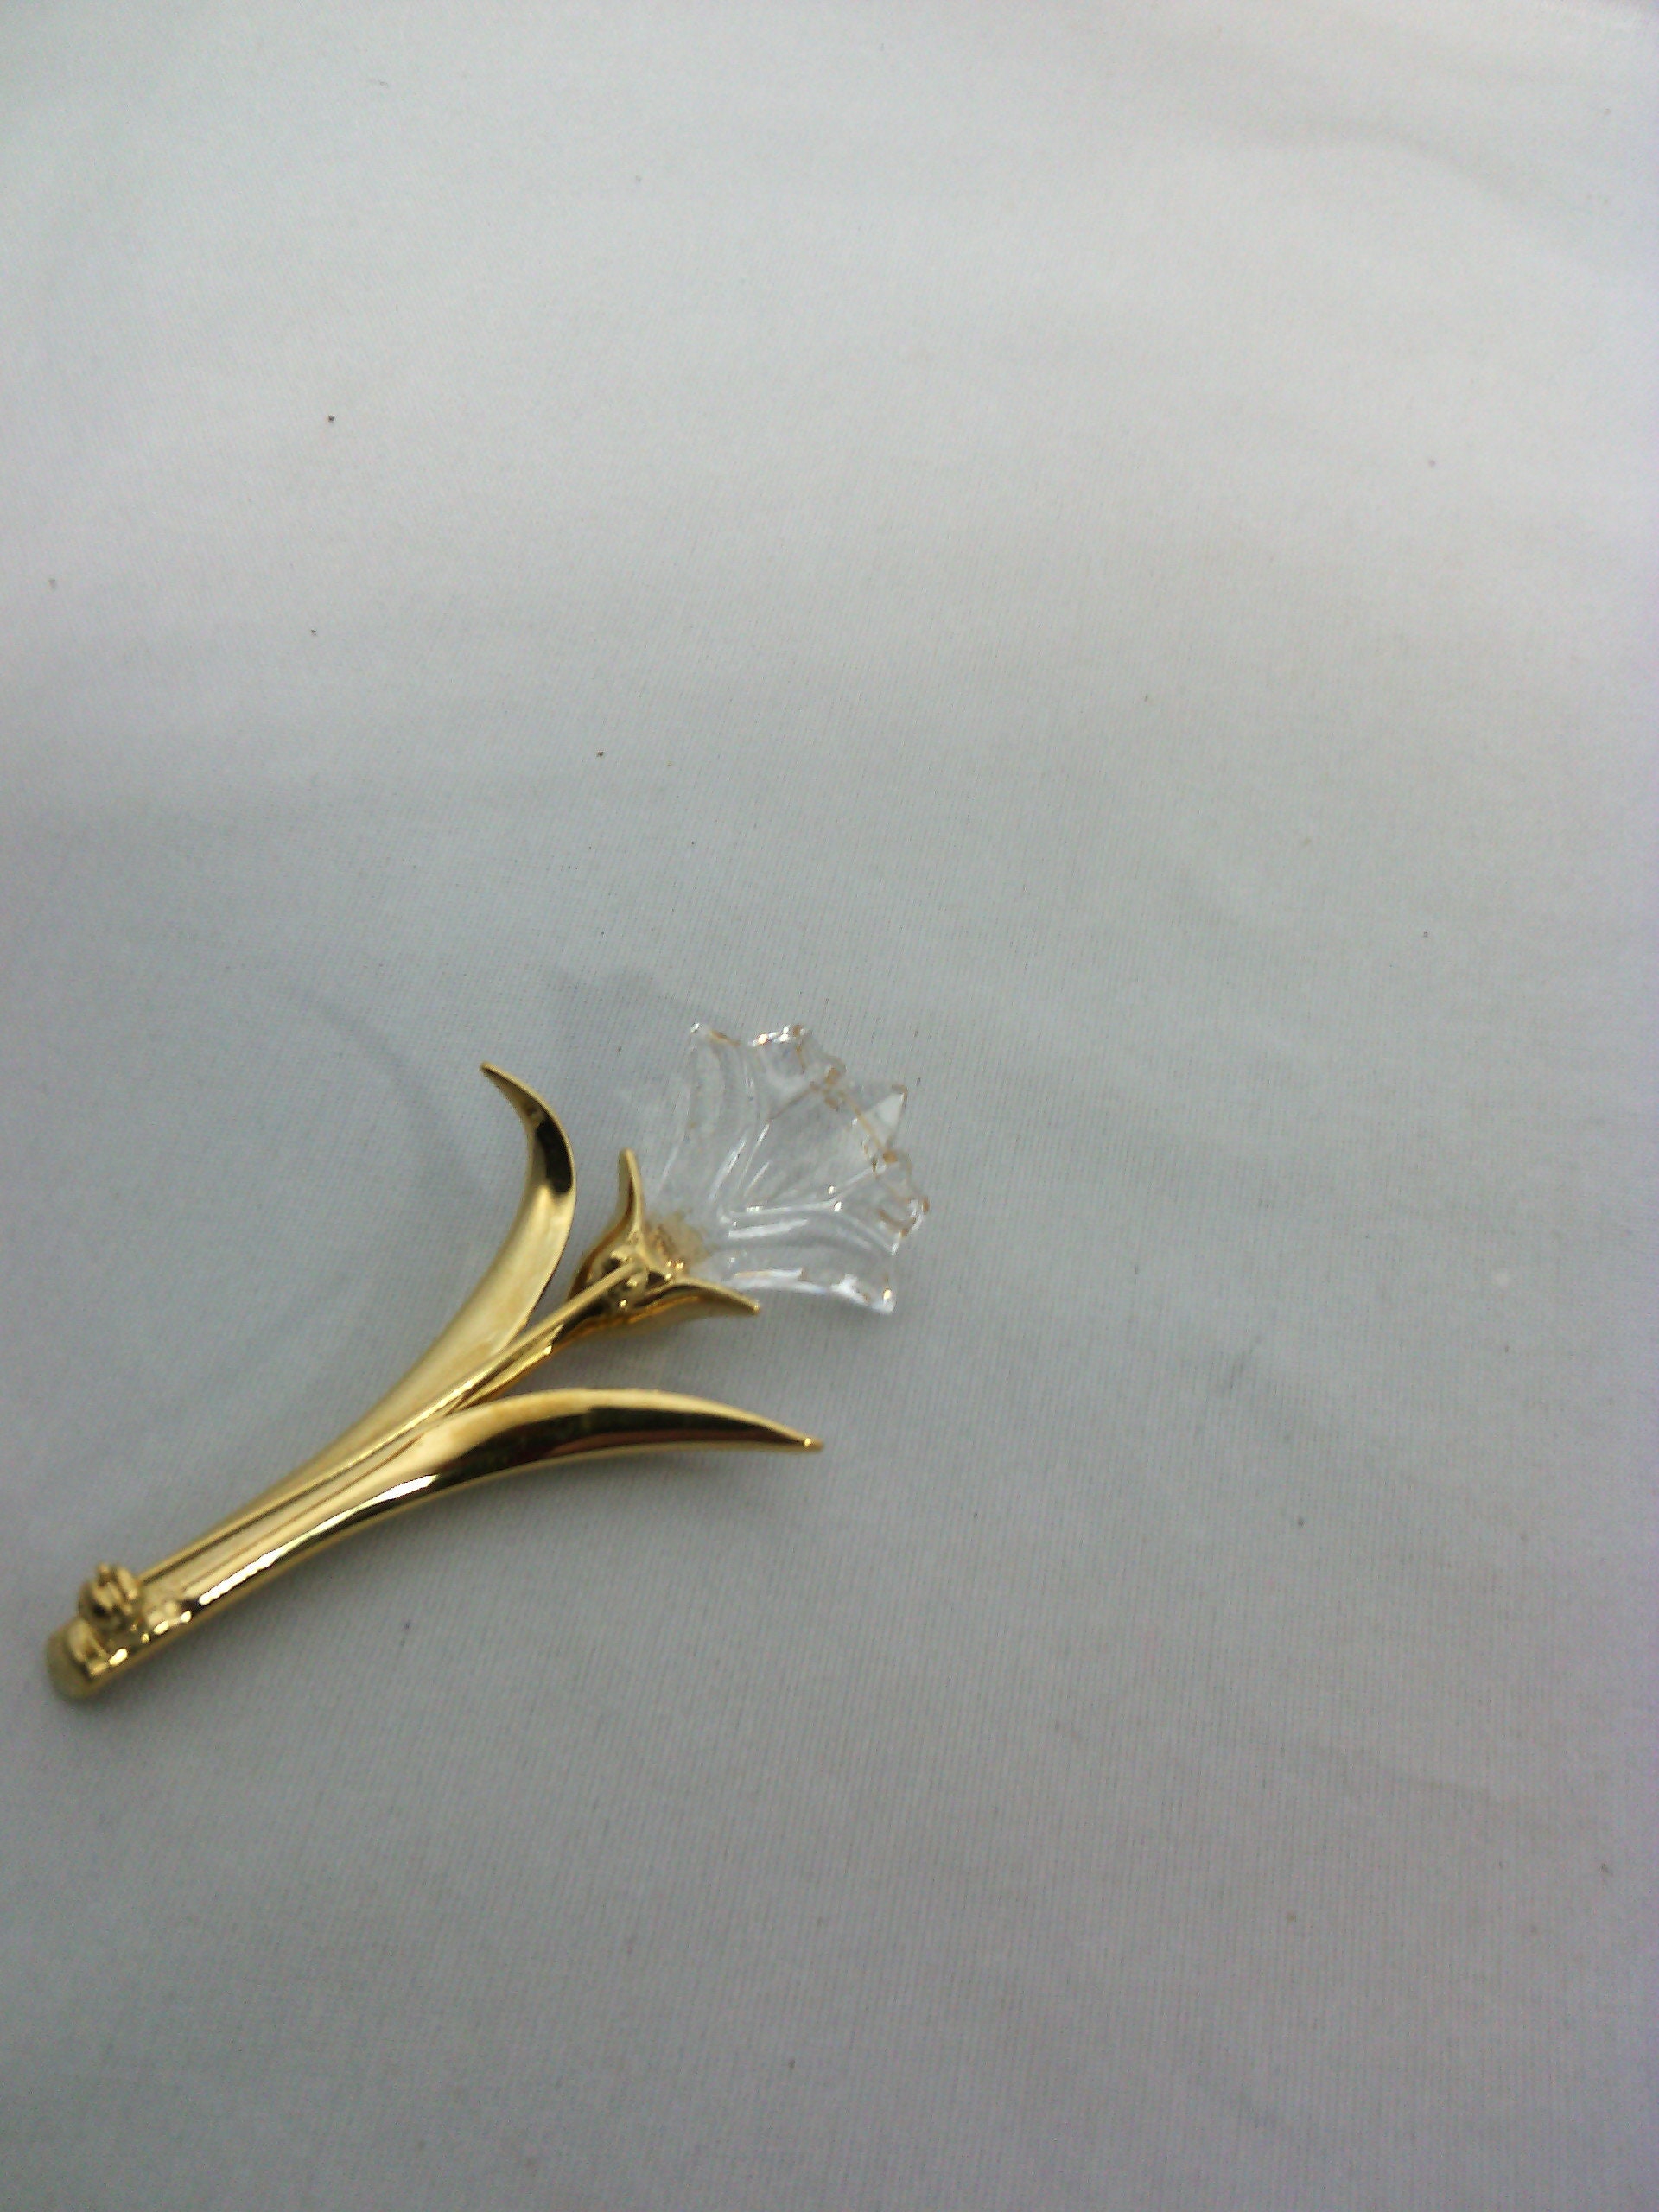 LERITZ Vintage Golden Scarf Ring Shawl Pin Signed Scarf -  Israel